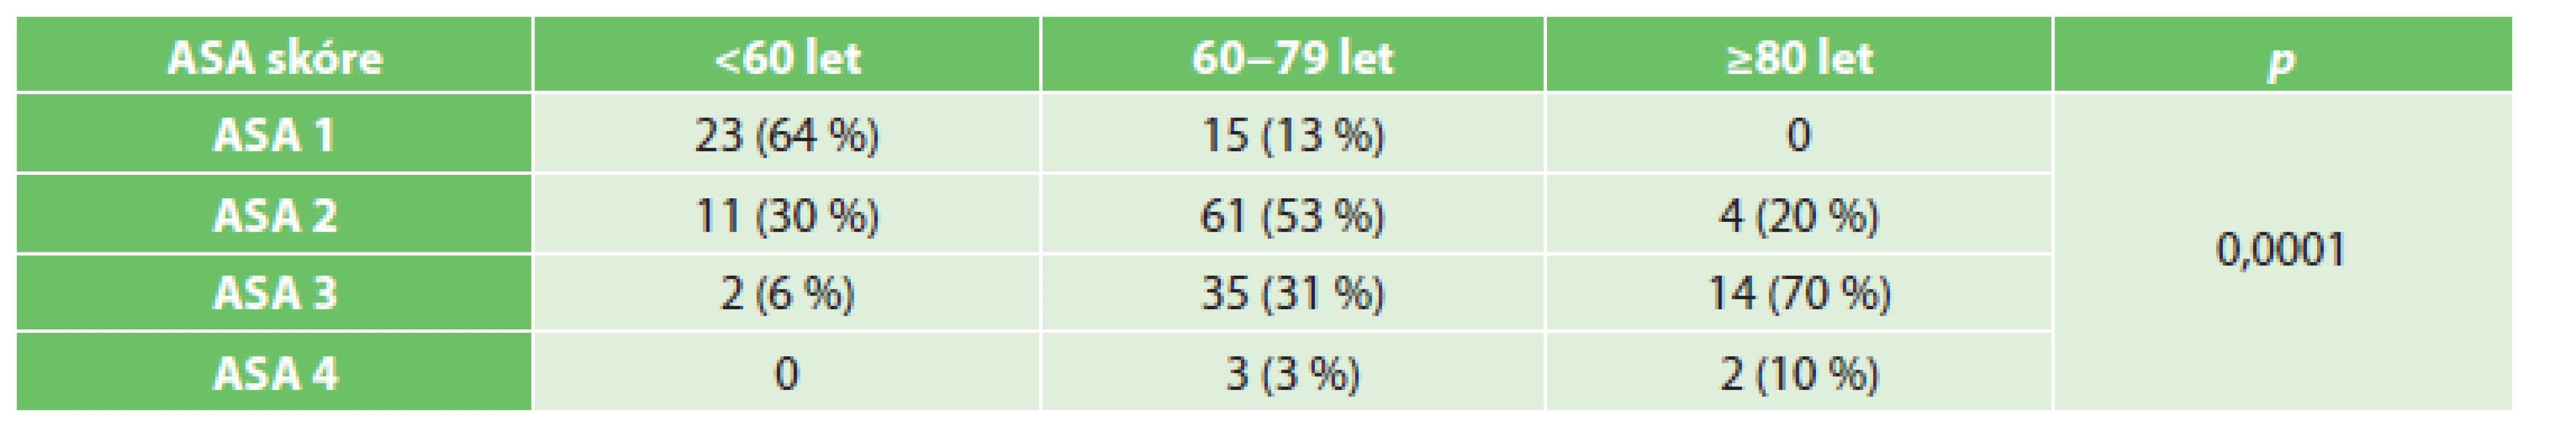 ASA skóre v jednotlivých věkových skupinách
Tab. 1: ASA score in individual age groups